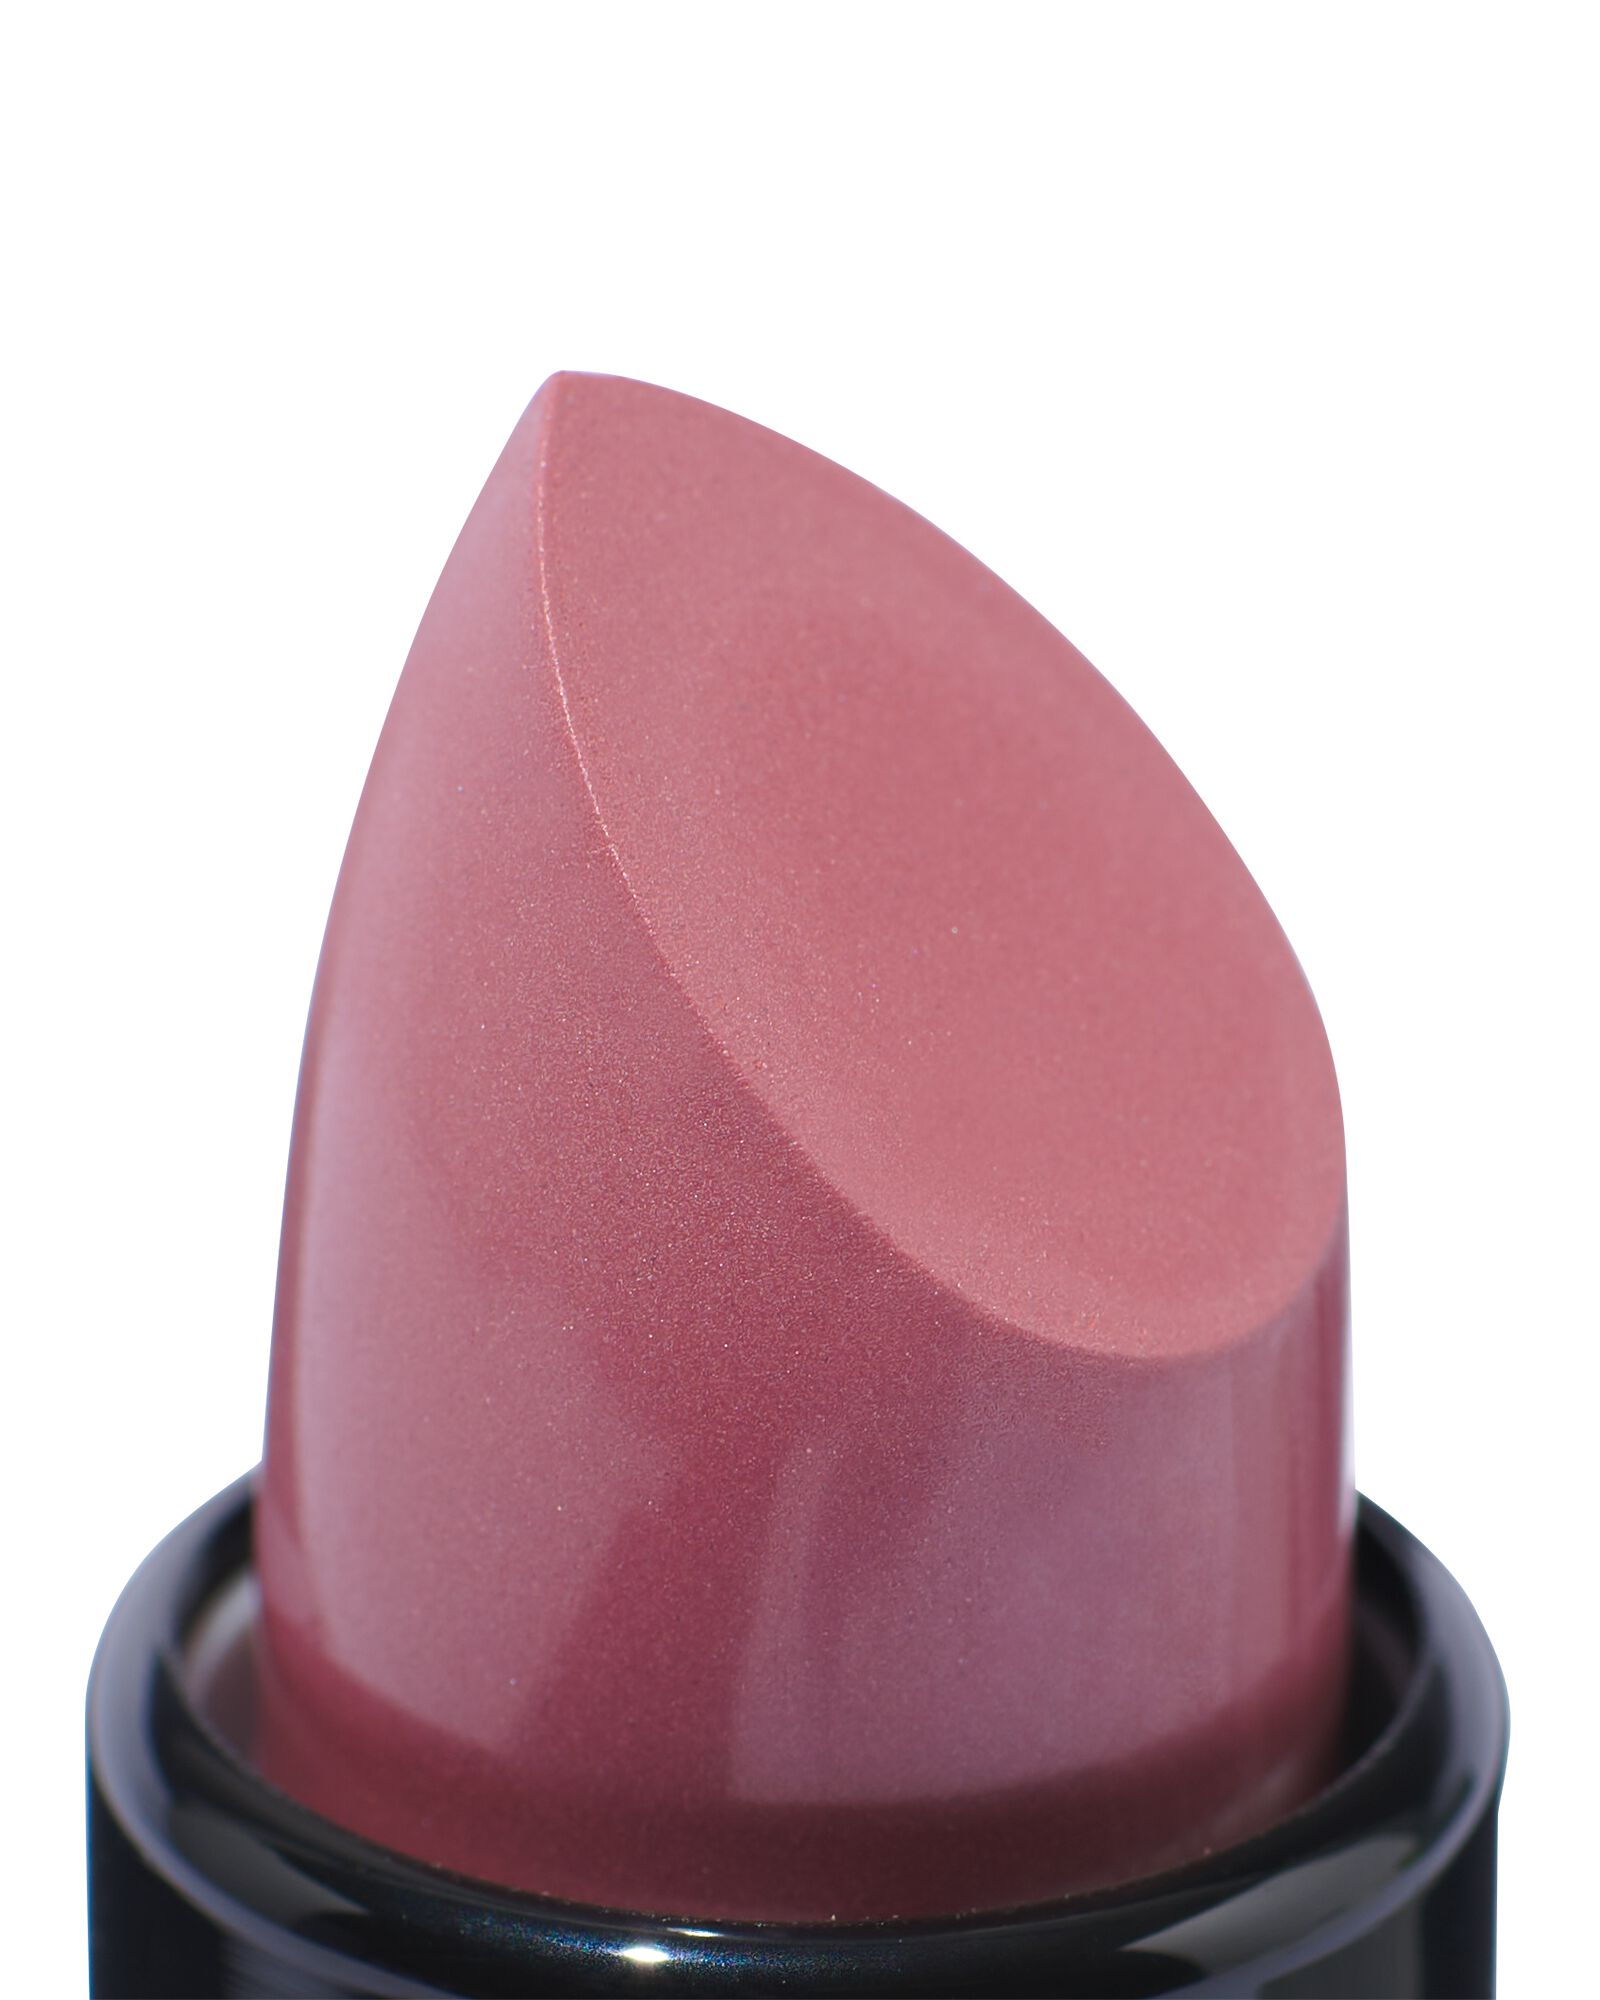 HEMA Moisturising Lipstick 910 Blushed Rose - Creamy Finish (rose foncé)